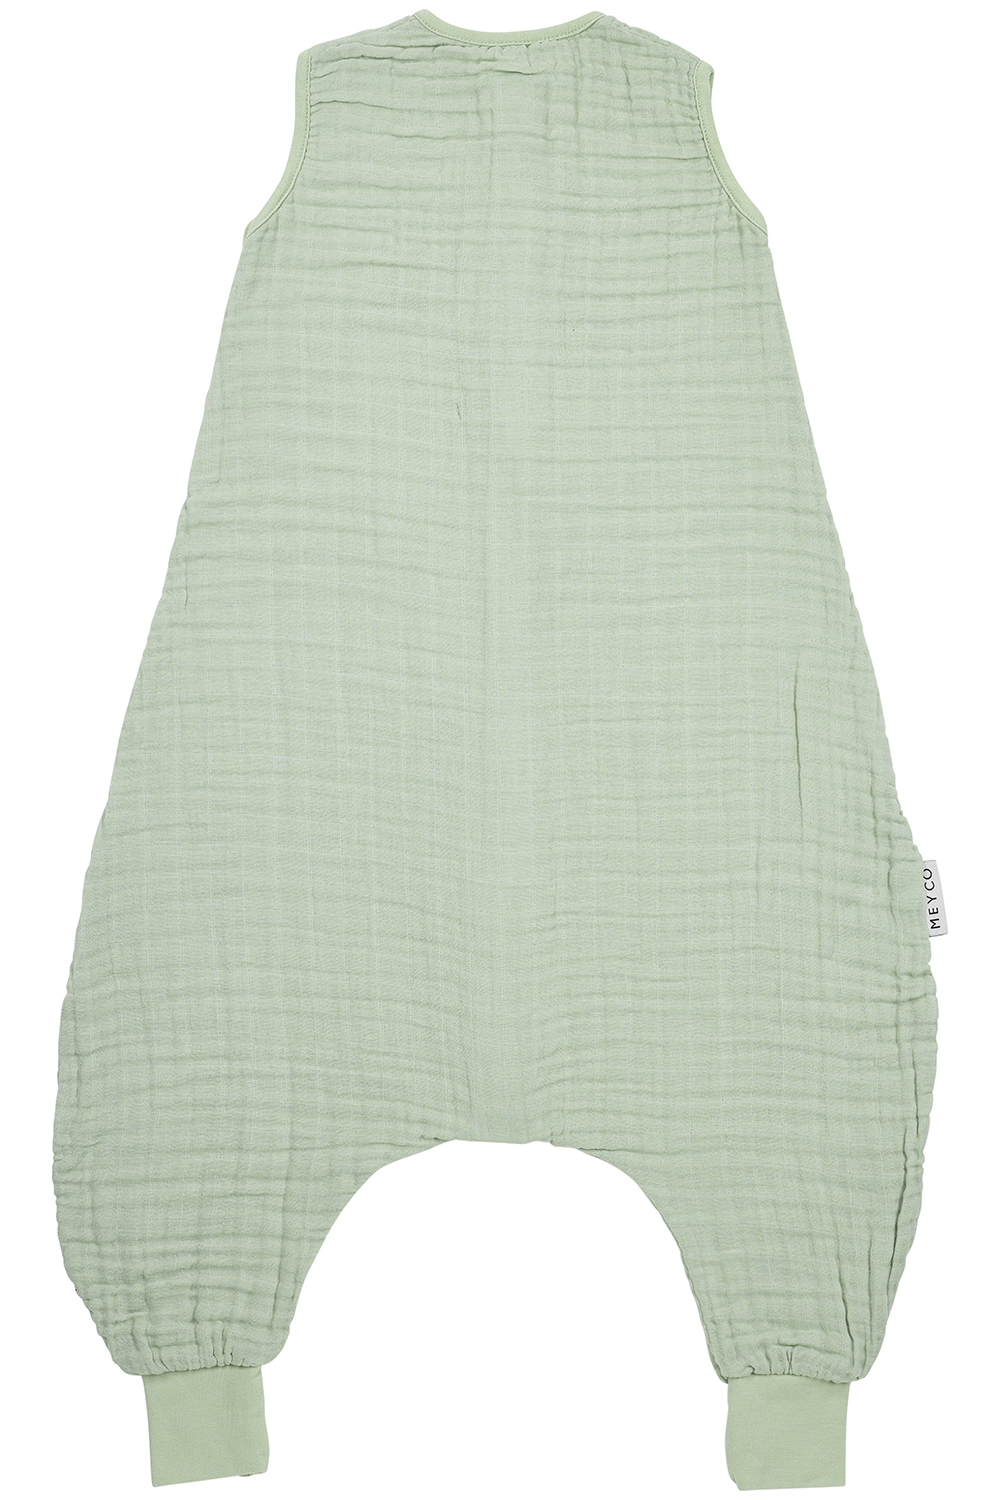 Baby summer sleep overall jumper pre-washed muslin Uni - soft green - 104cm